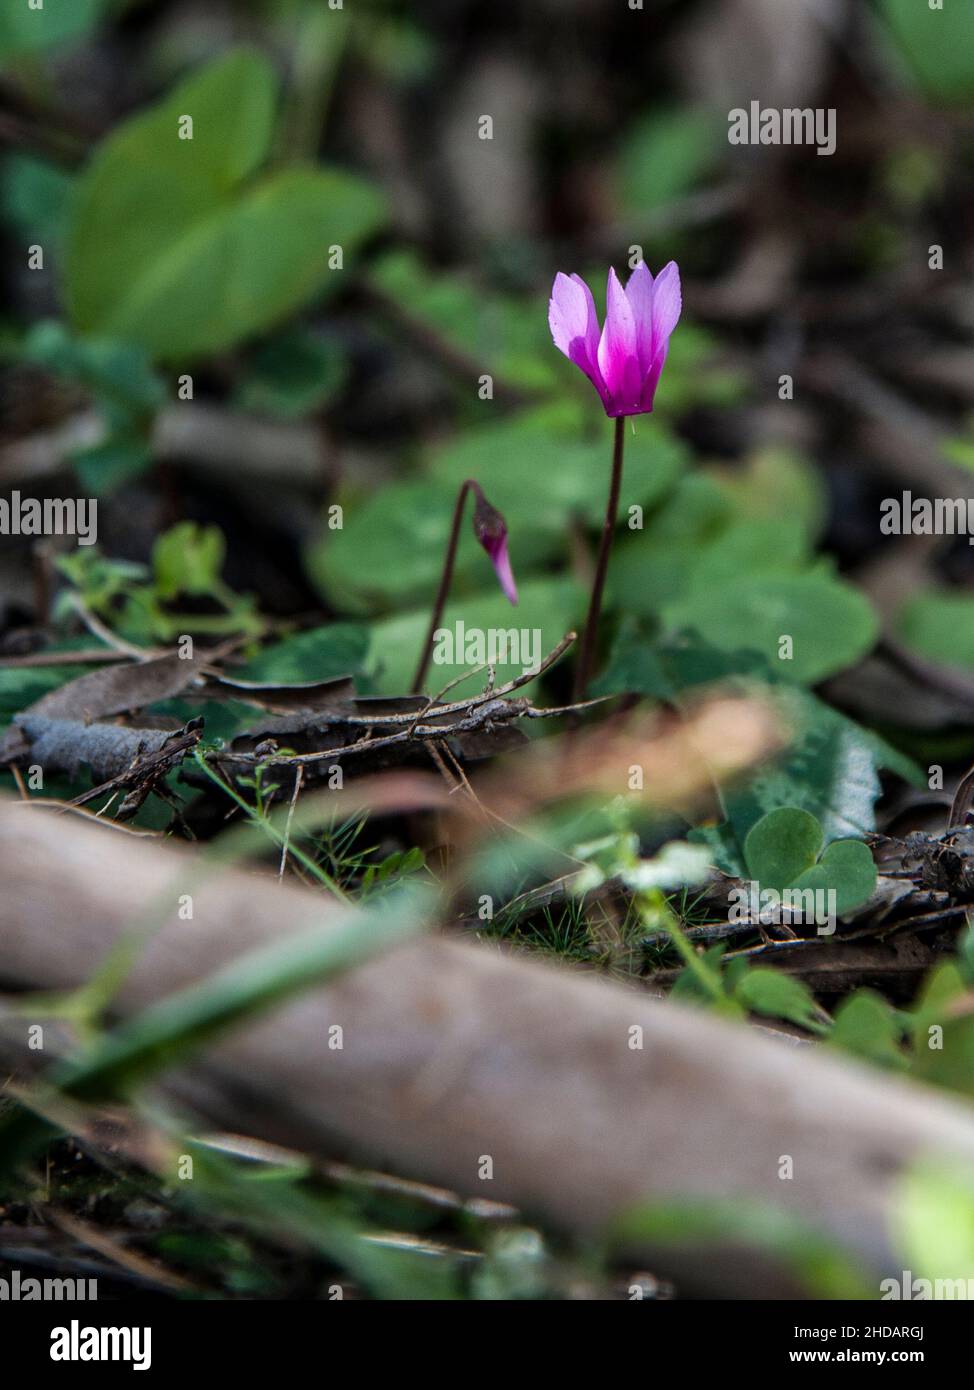 Close-up shot of a purple cyclamen flower in an outdoor garden Stock Photo